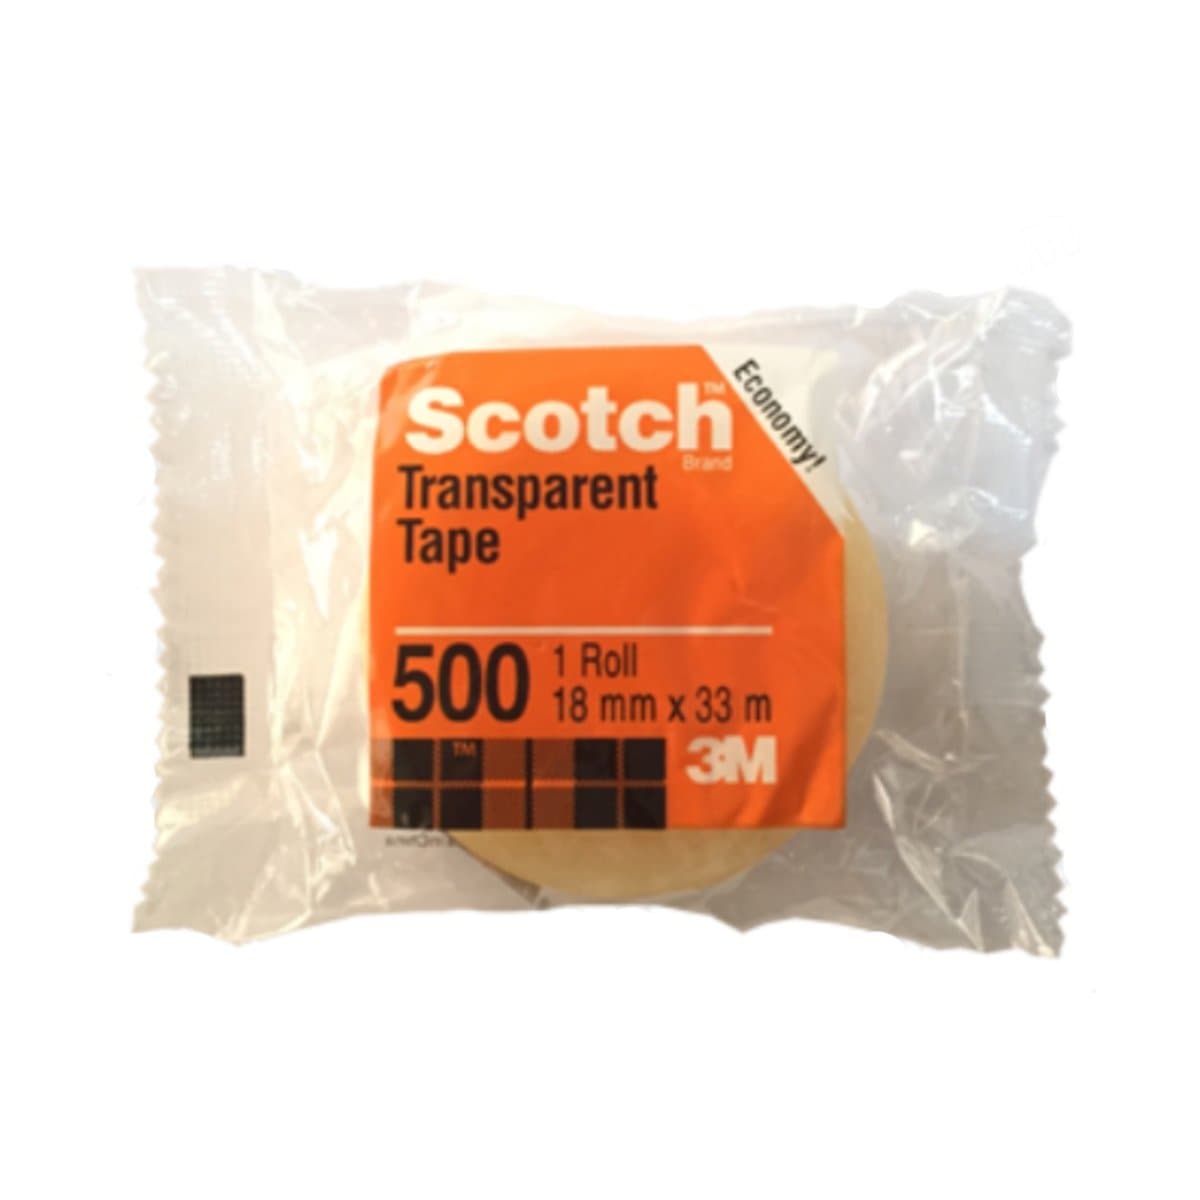 3M Scotch Transparent Tape 500 Yellow, 18mm x 33m